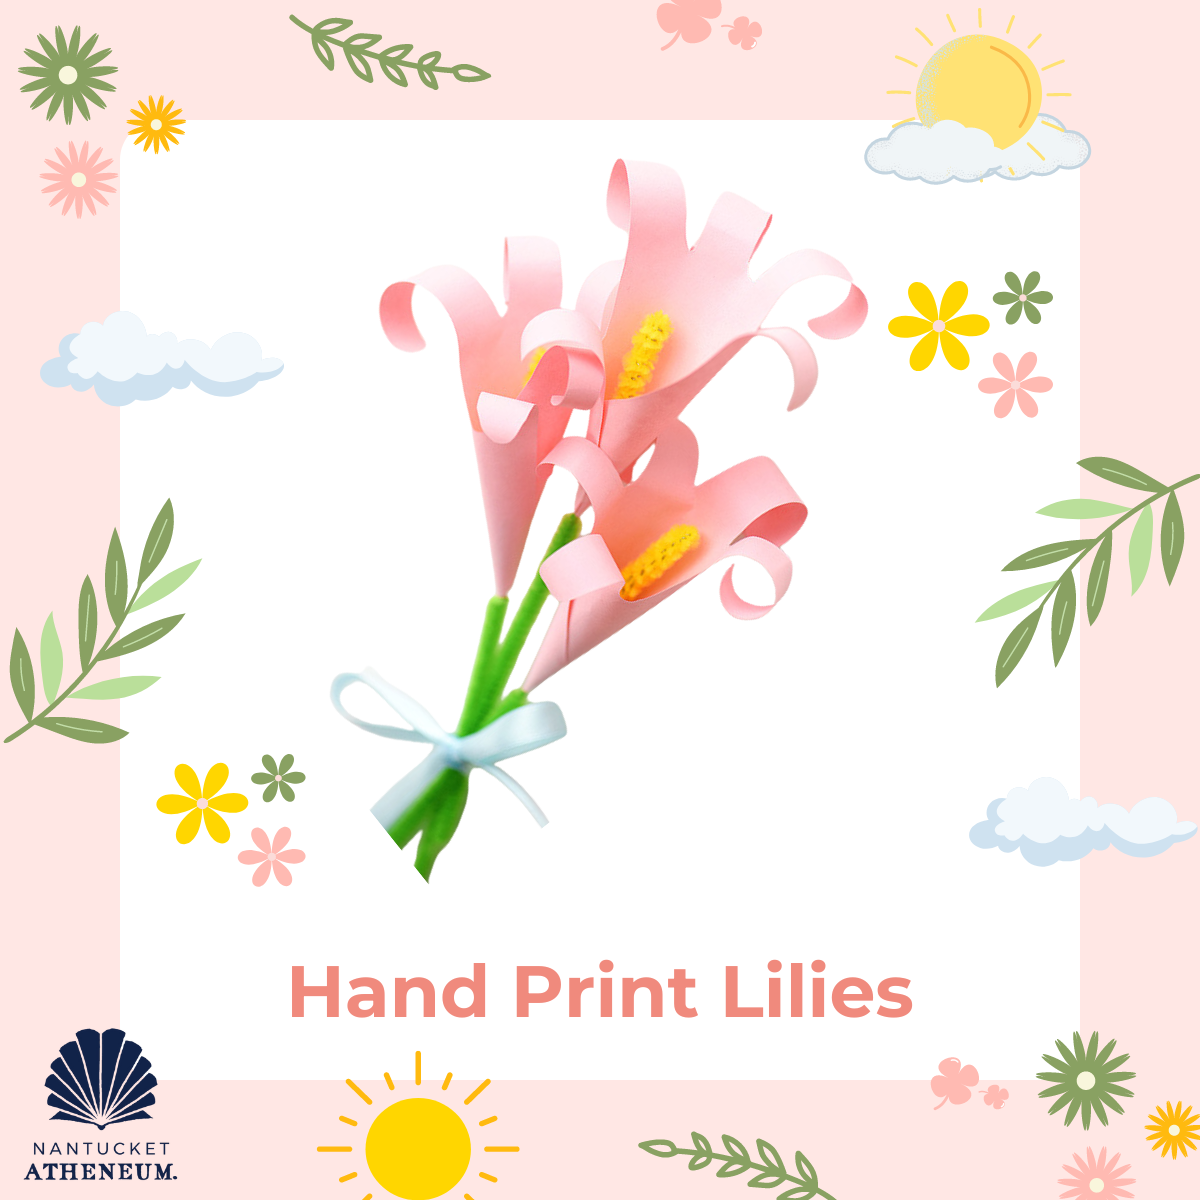 Grab & Go Bag: Hand Print Lilies